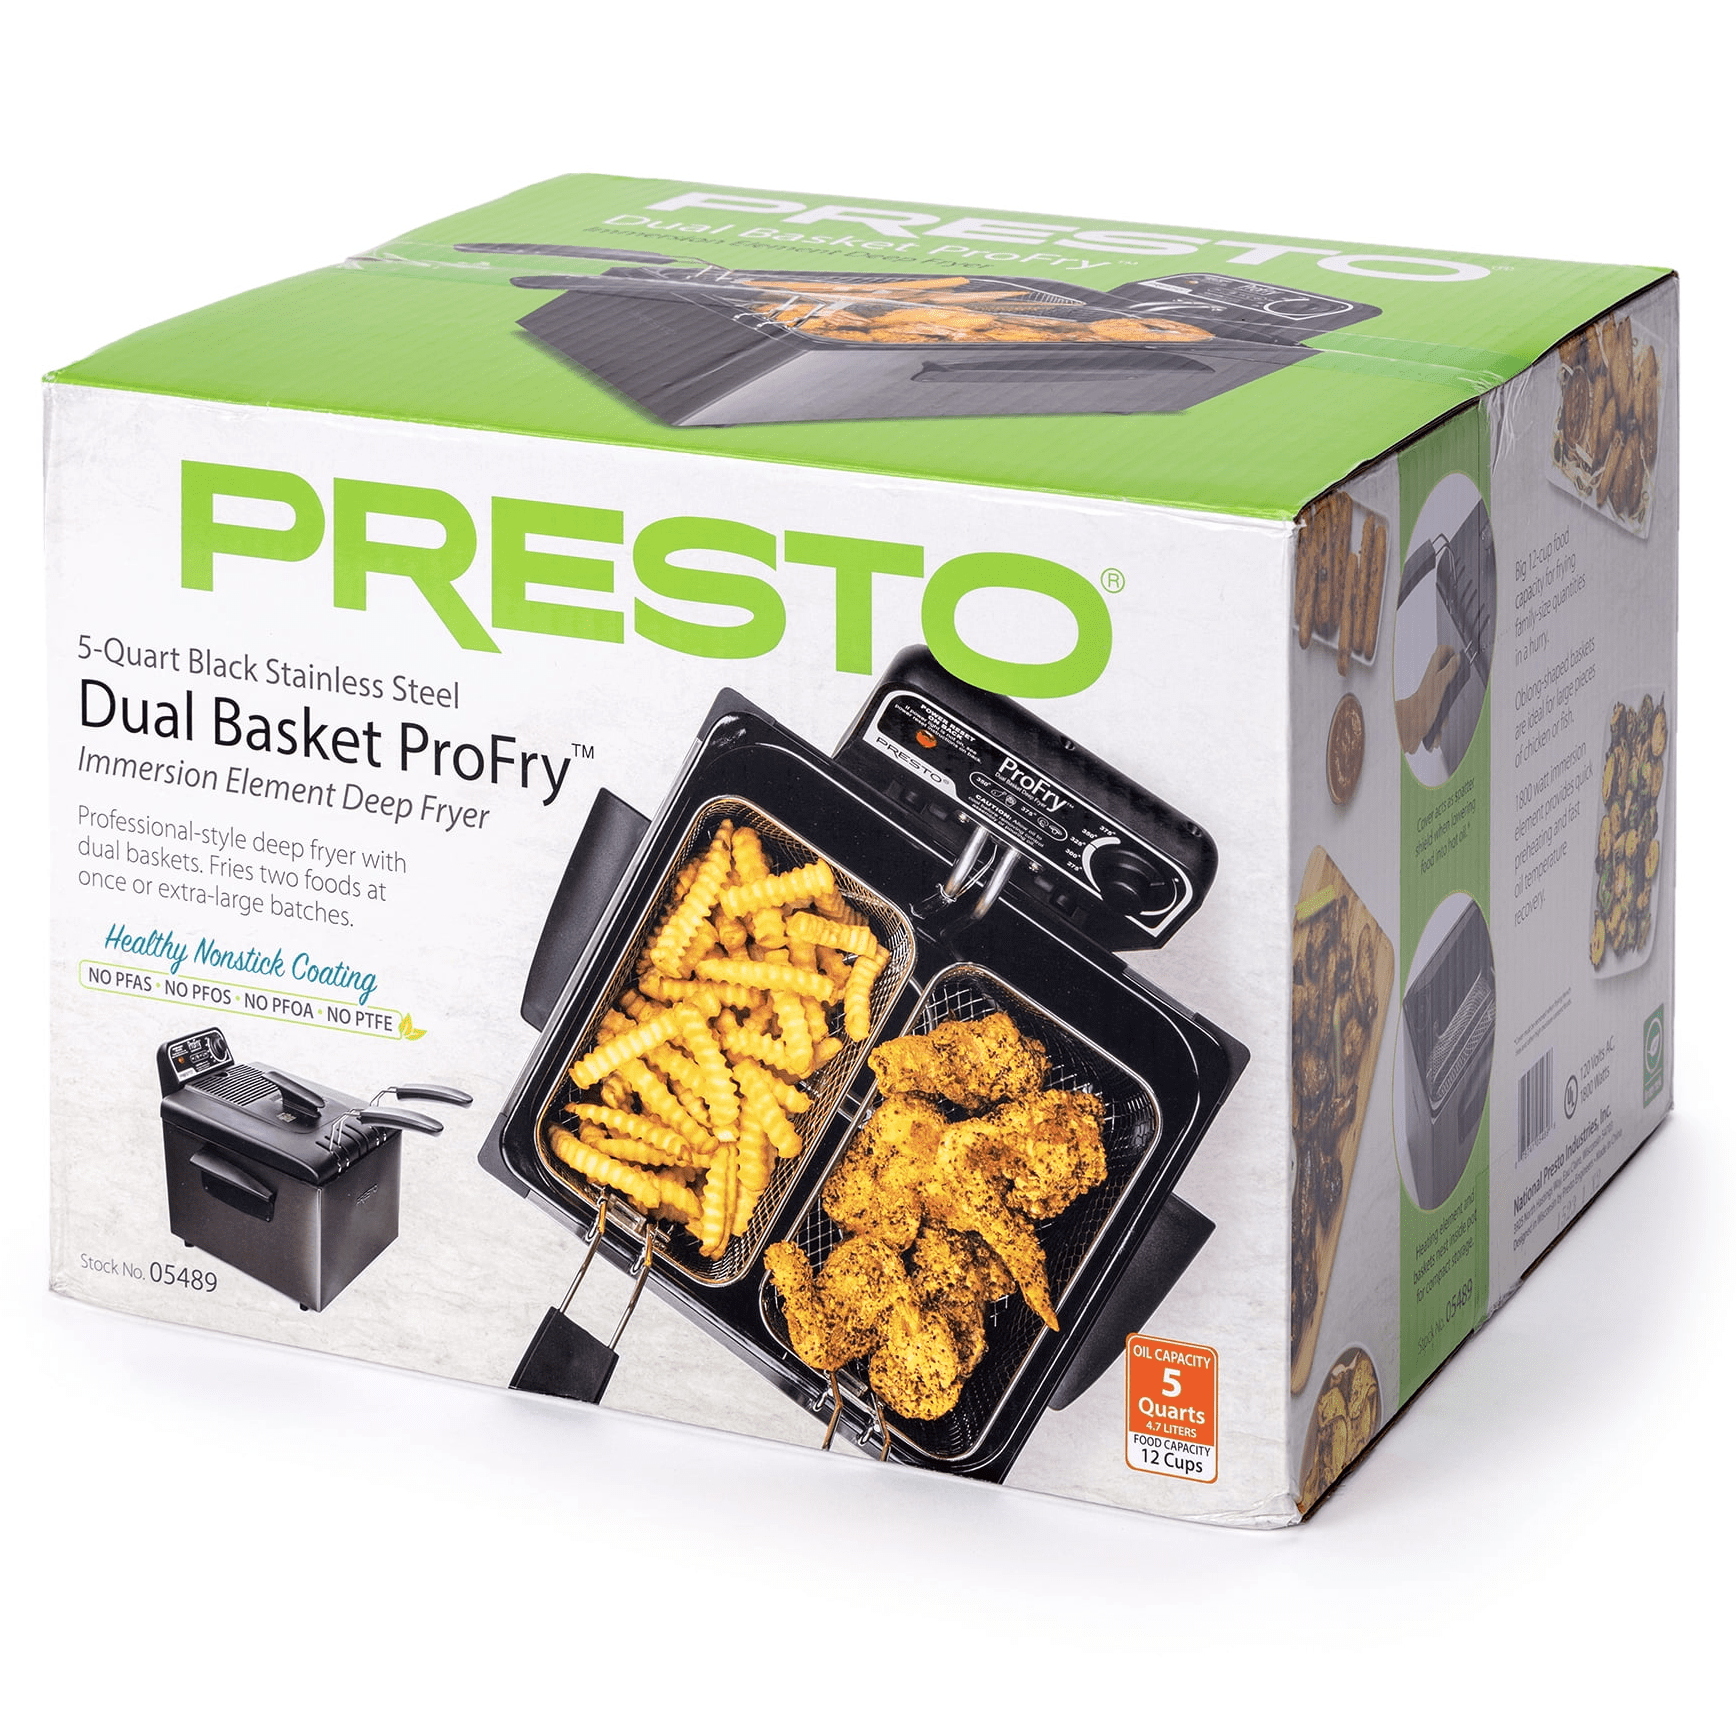 Dual Basket ProFry™ immersion element deep fryer - Deep Fryers - Presto®